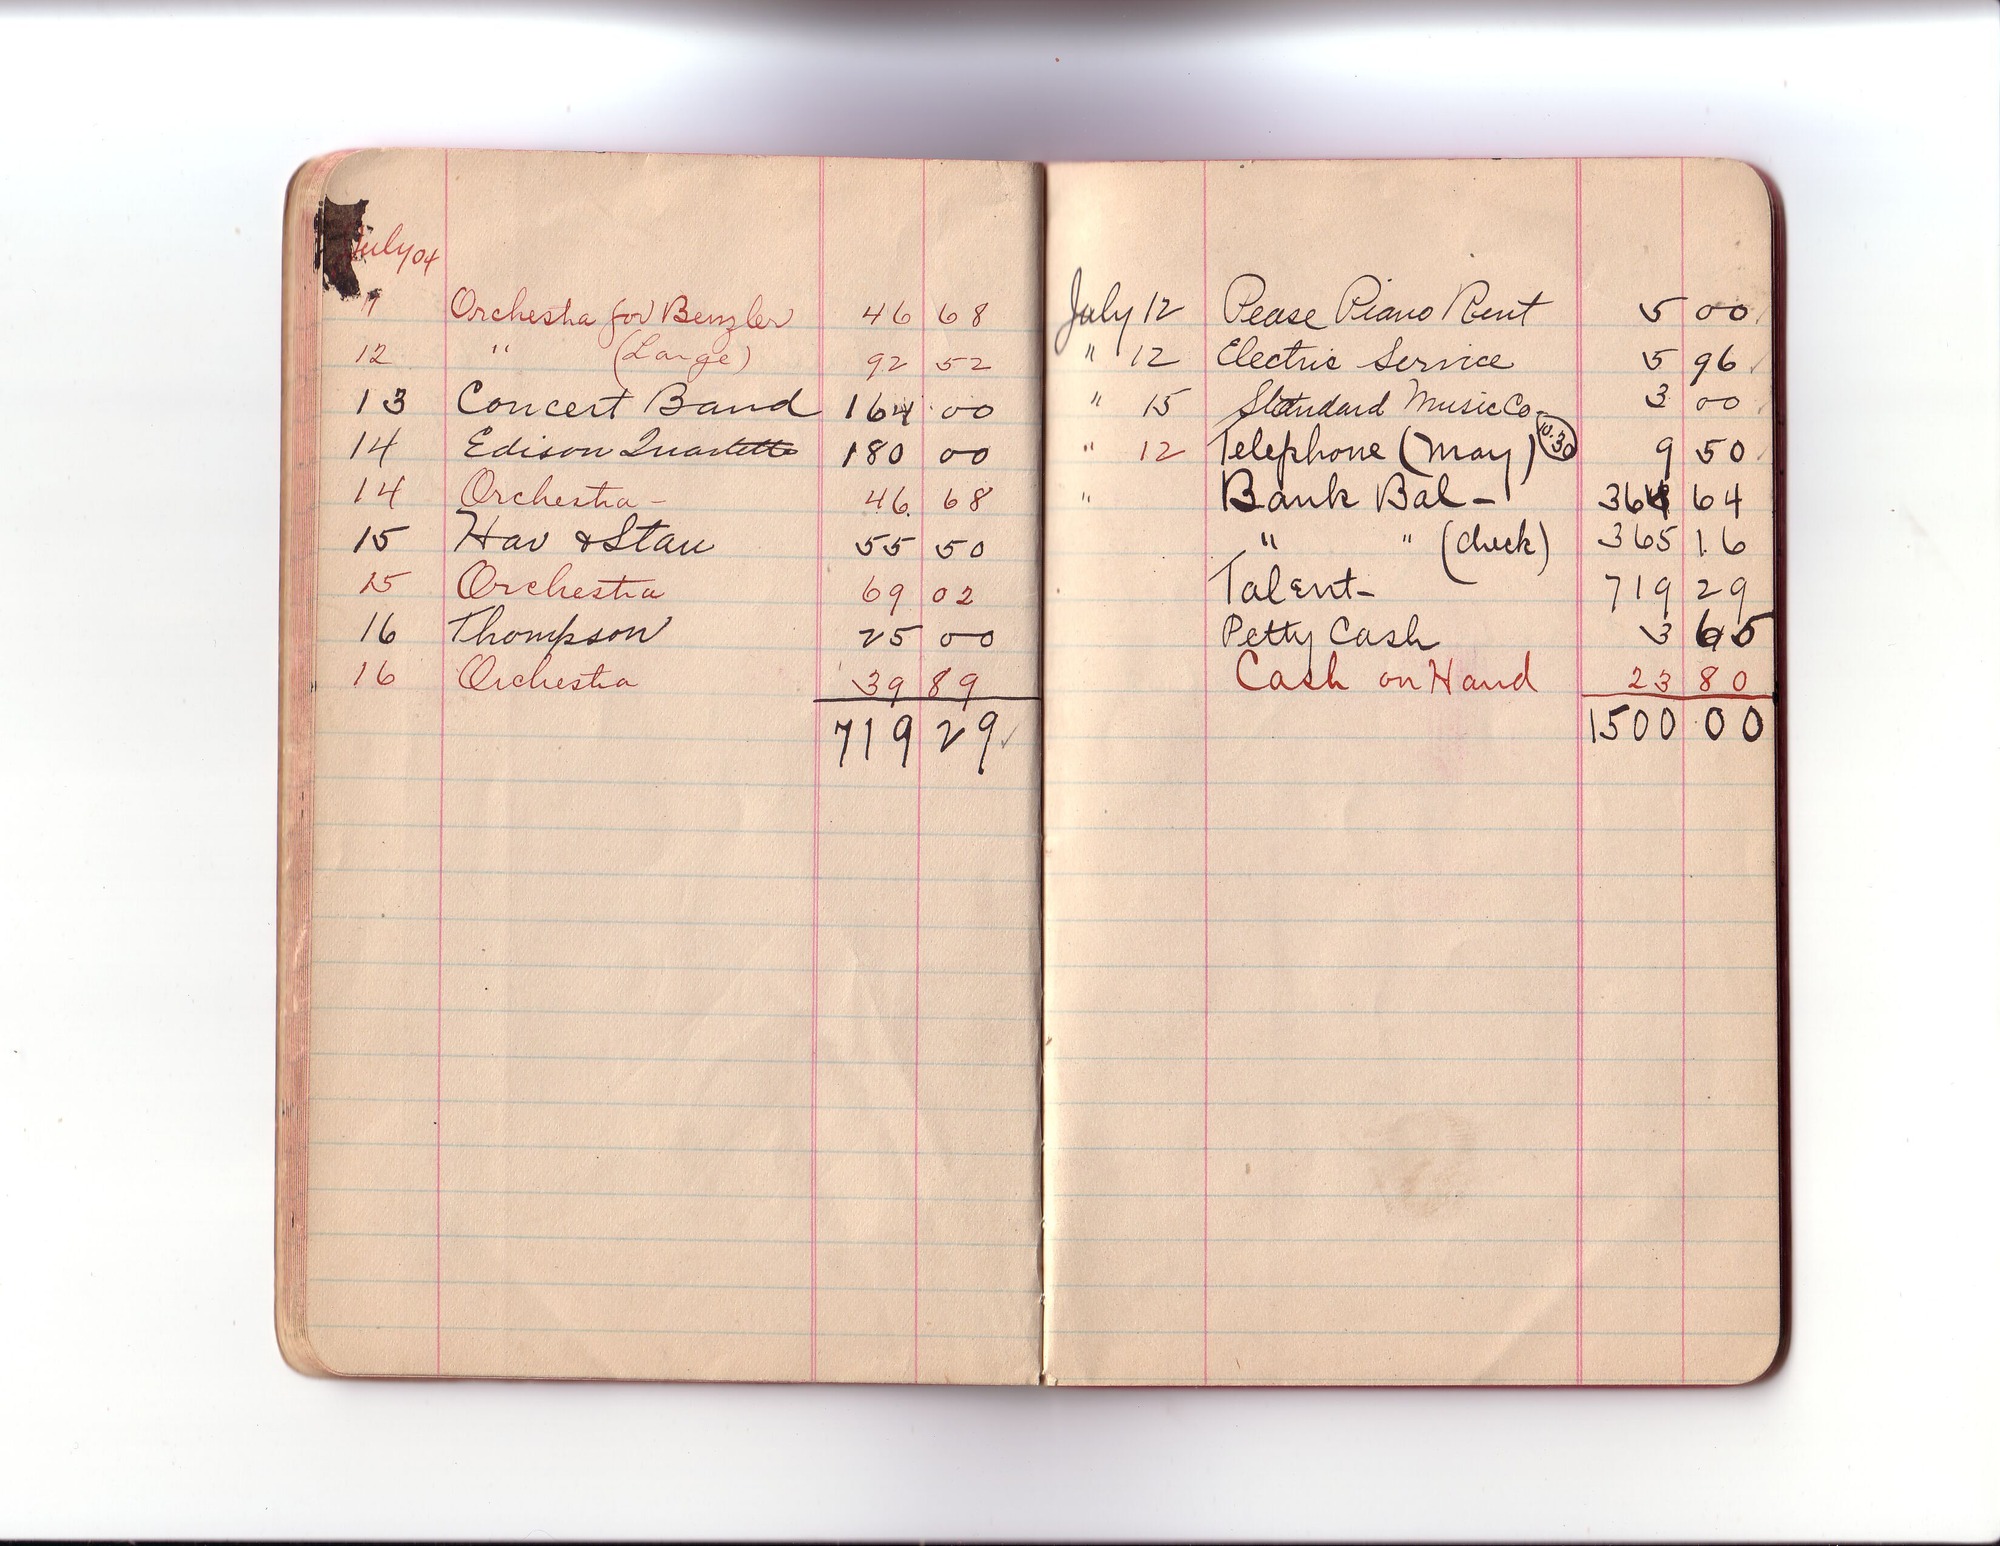 Thomas Edison's New York City Recording Studio Cash Book 01 (of 21), Image 17 (of 41).